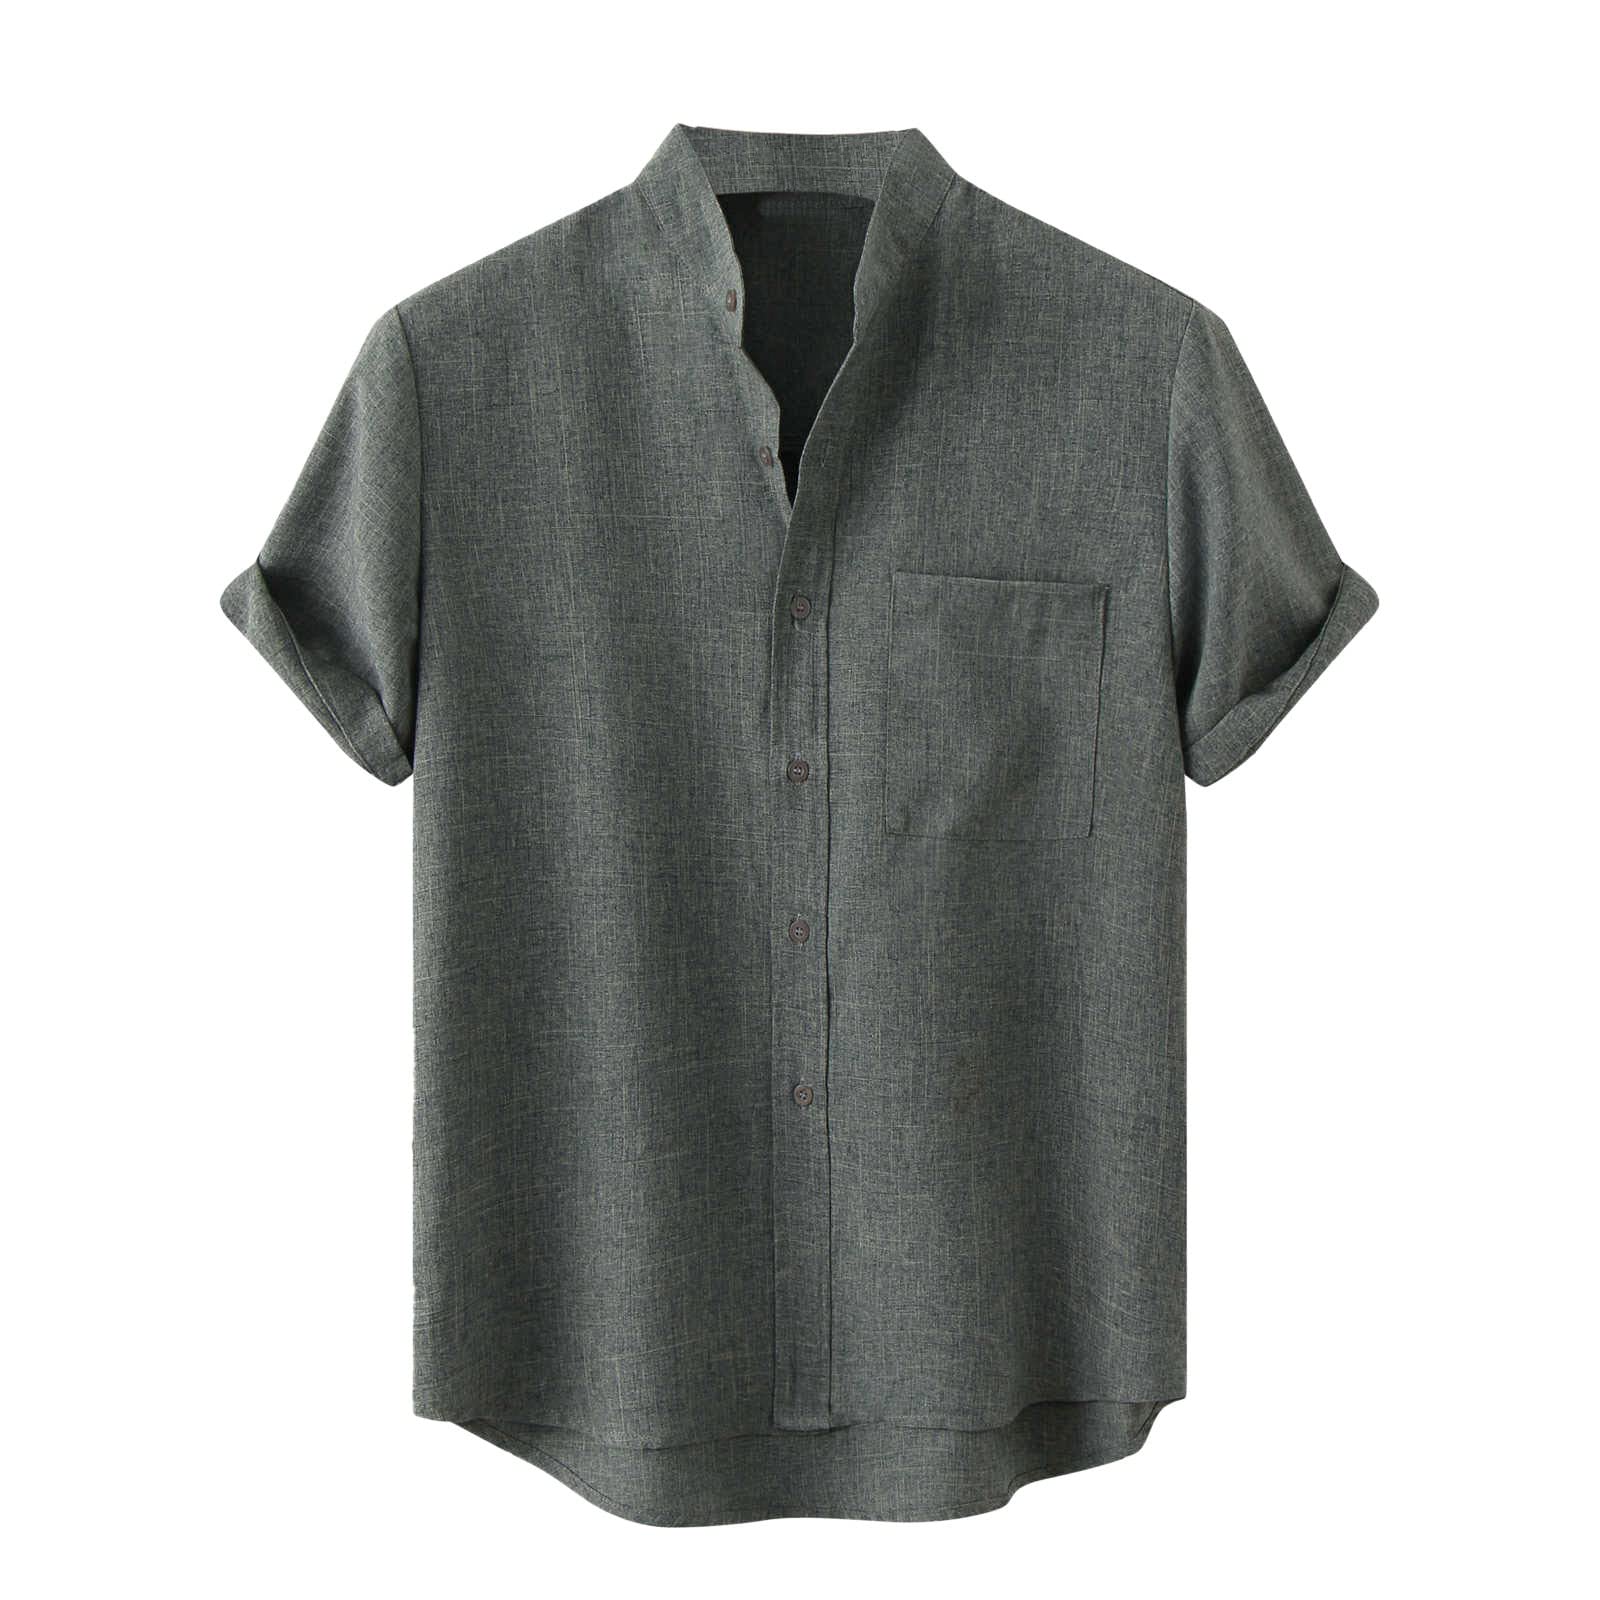 VALSEEL Mens Cotton Linen Shirts Summer Lightweight Comfy Short Sleeve Stand Collar Solid Color Casual Button Down Shirt